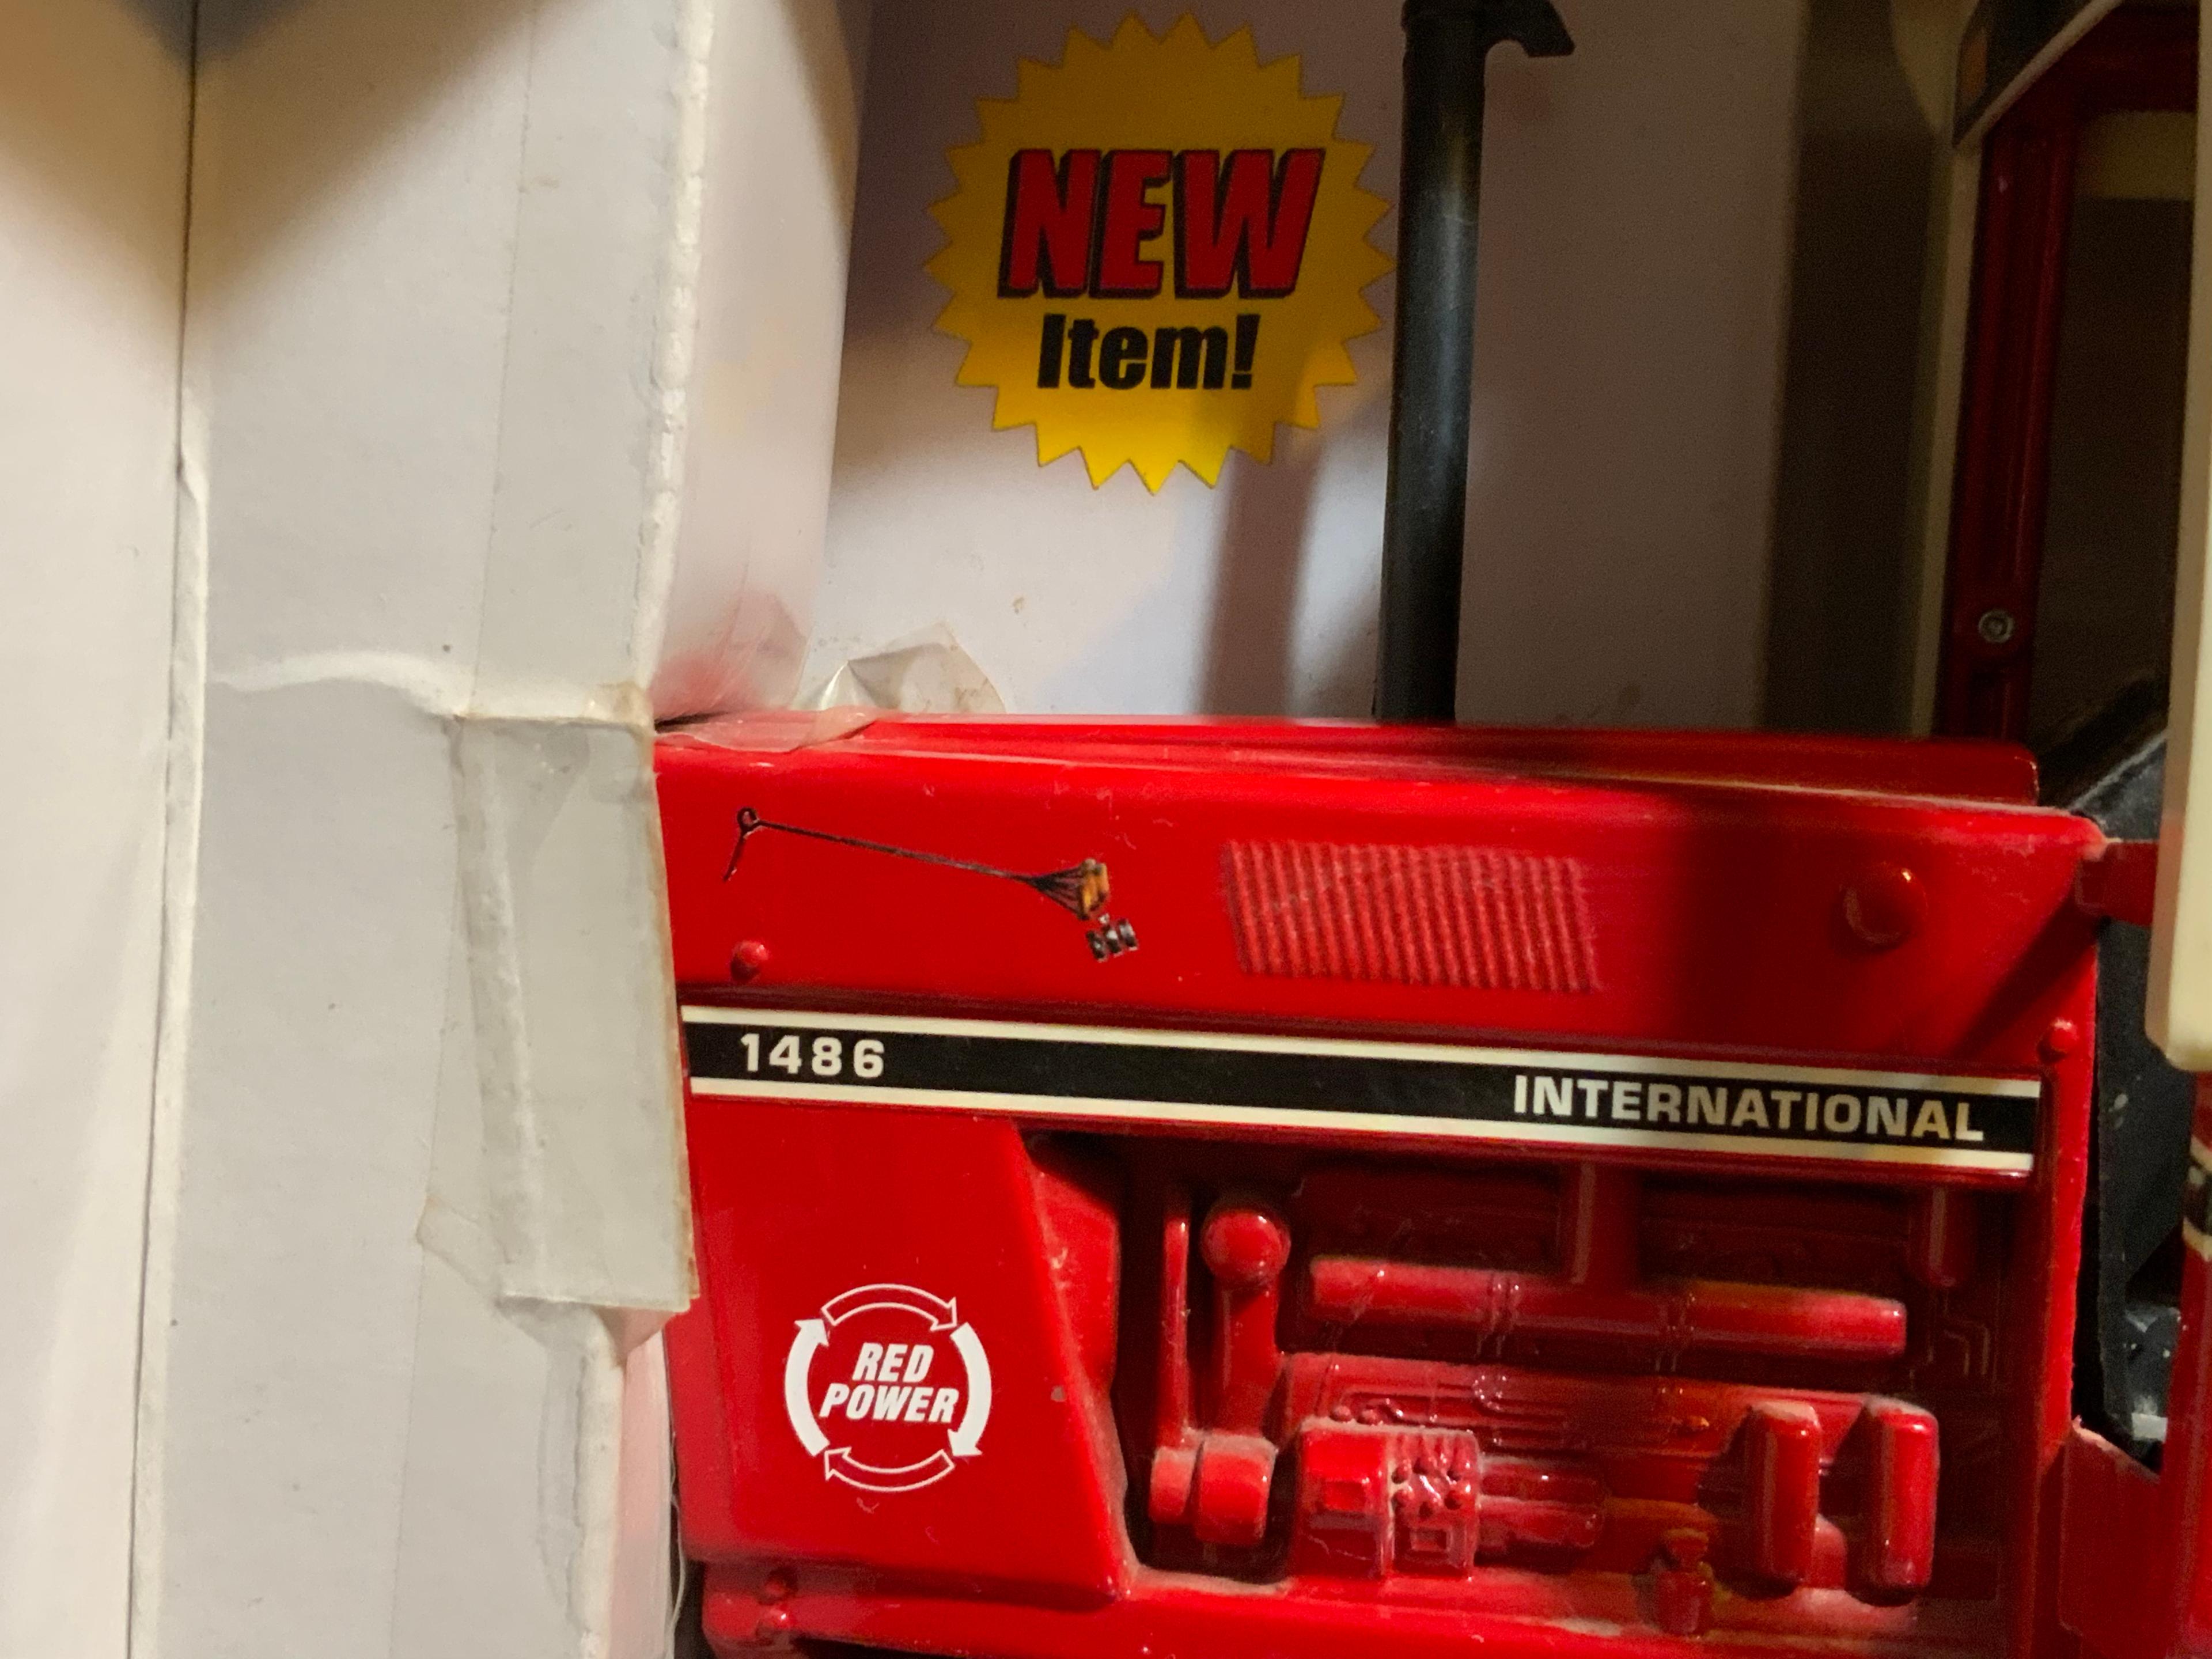 International 1486 Case IH Red Power with Branding irons 1/16 NIB